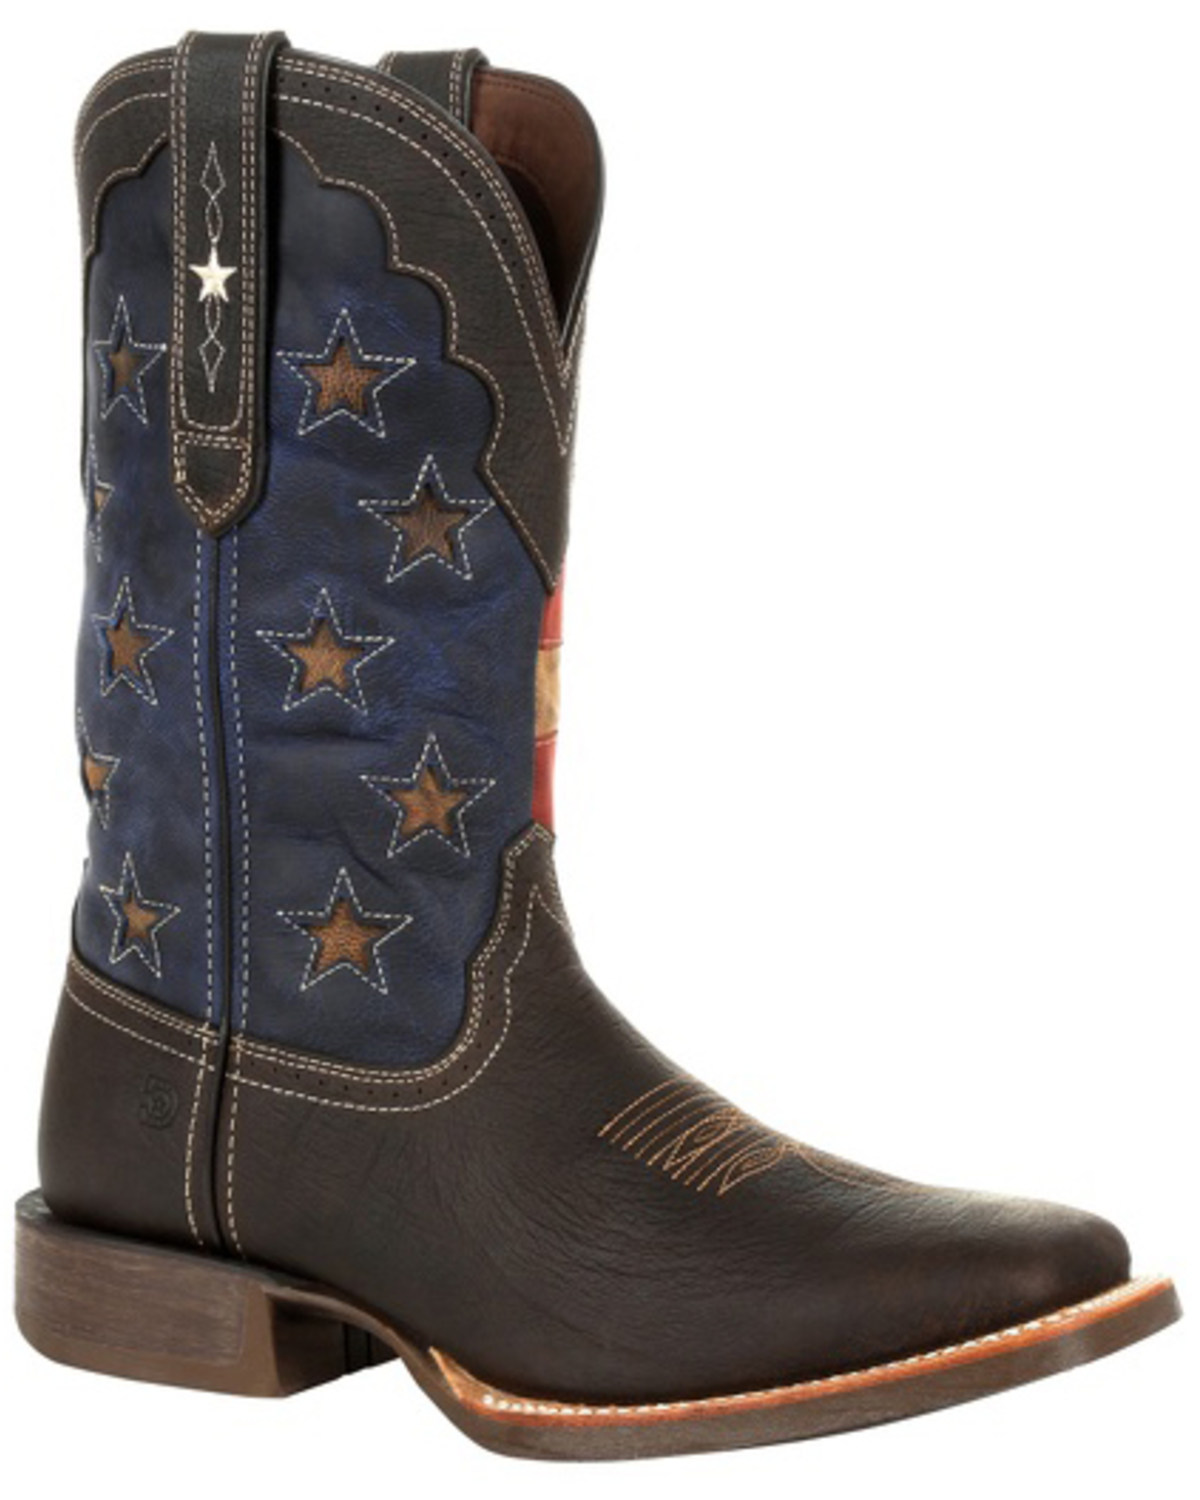 Durango Men's Rebel Pro Vintage Flag Western Performance Boots - Broad Square Toe